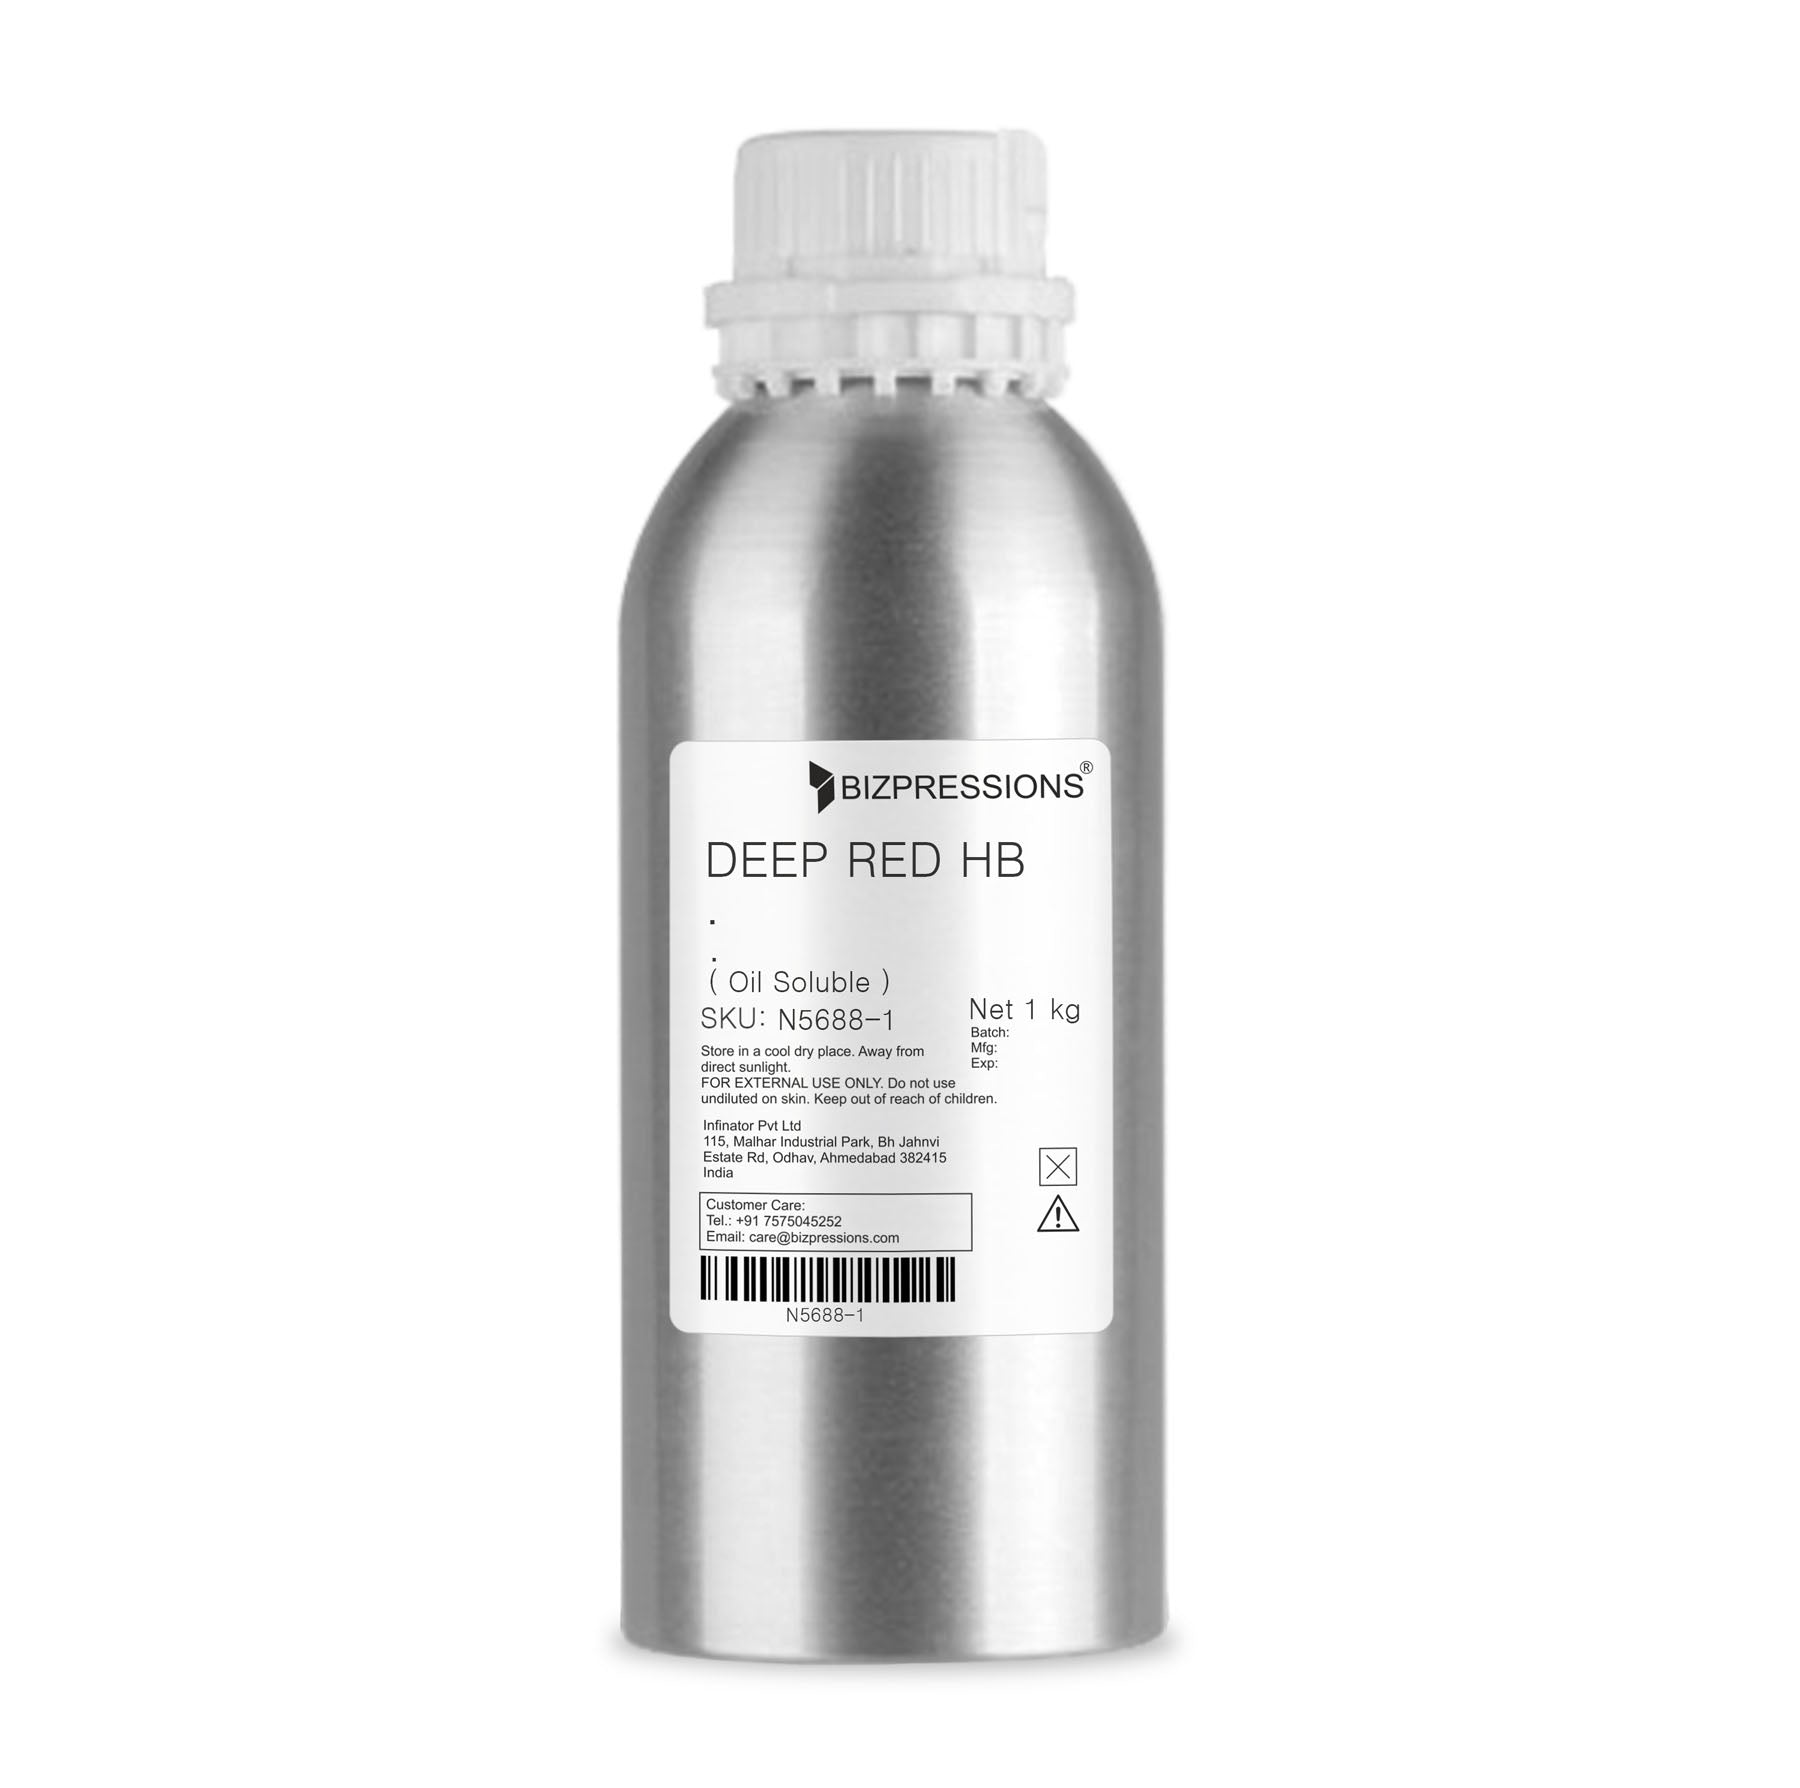 DEEP RED HB - Fragrance ( Oil Soluble ) - 1 kg